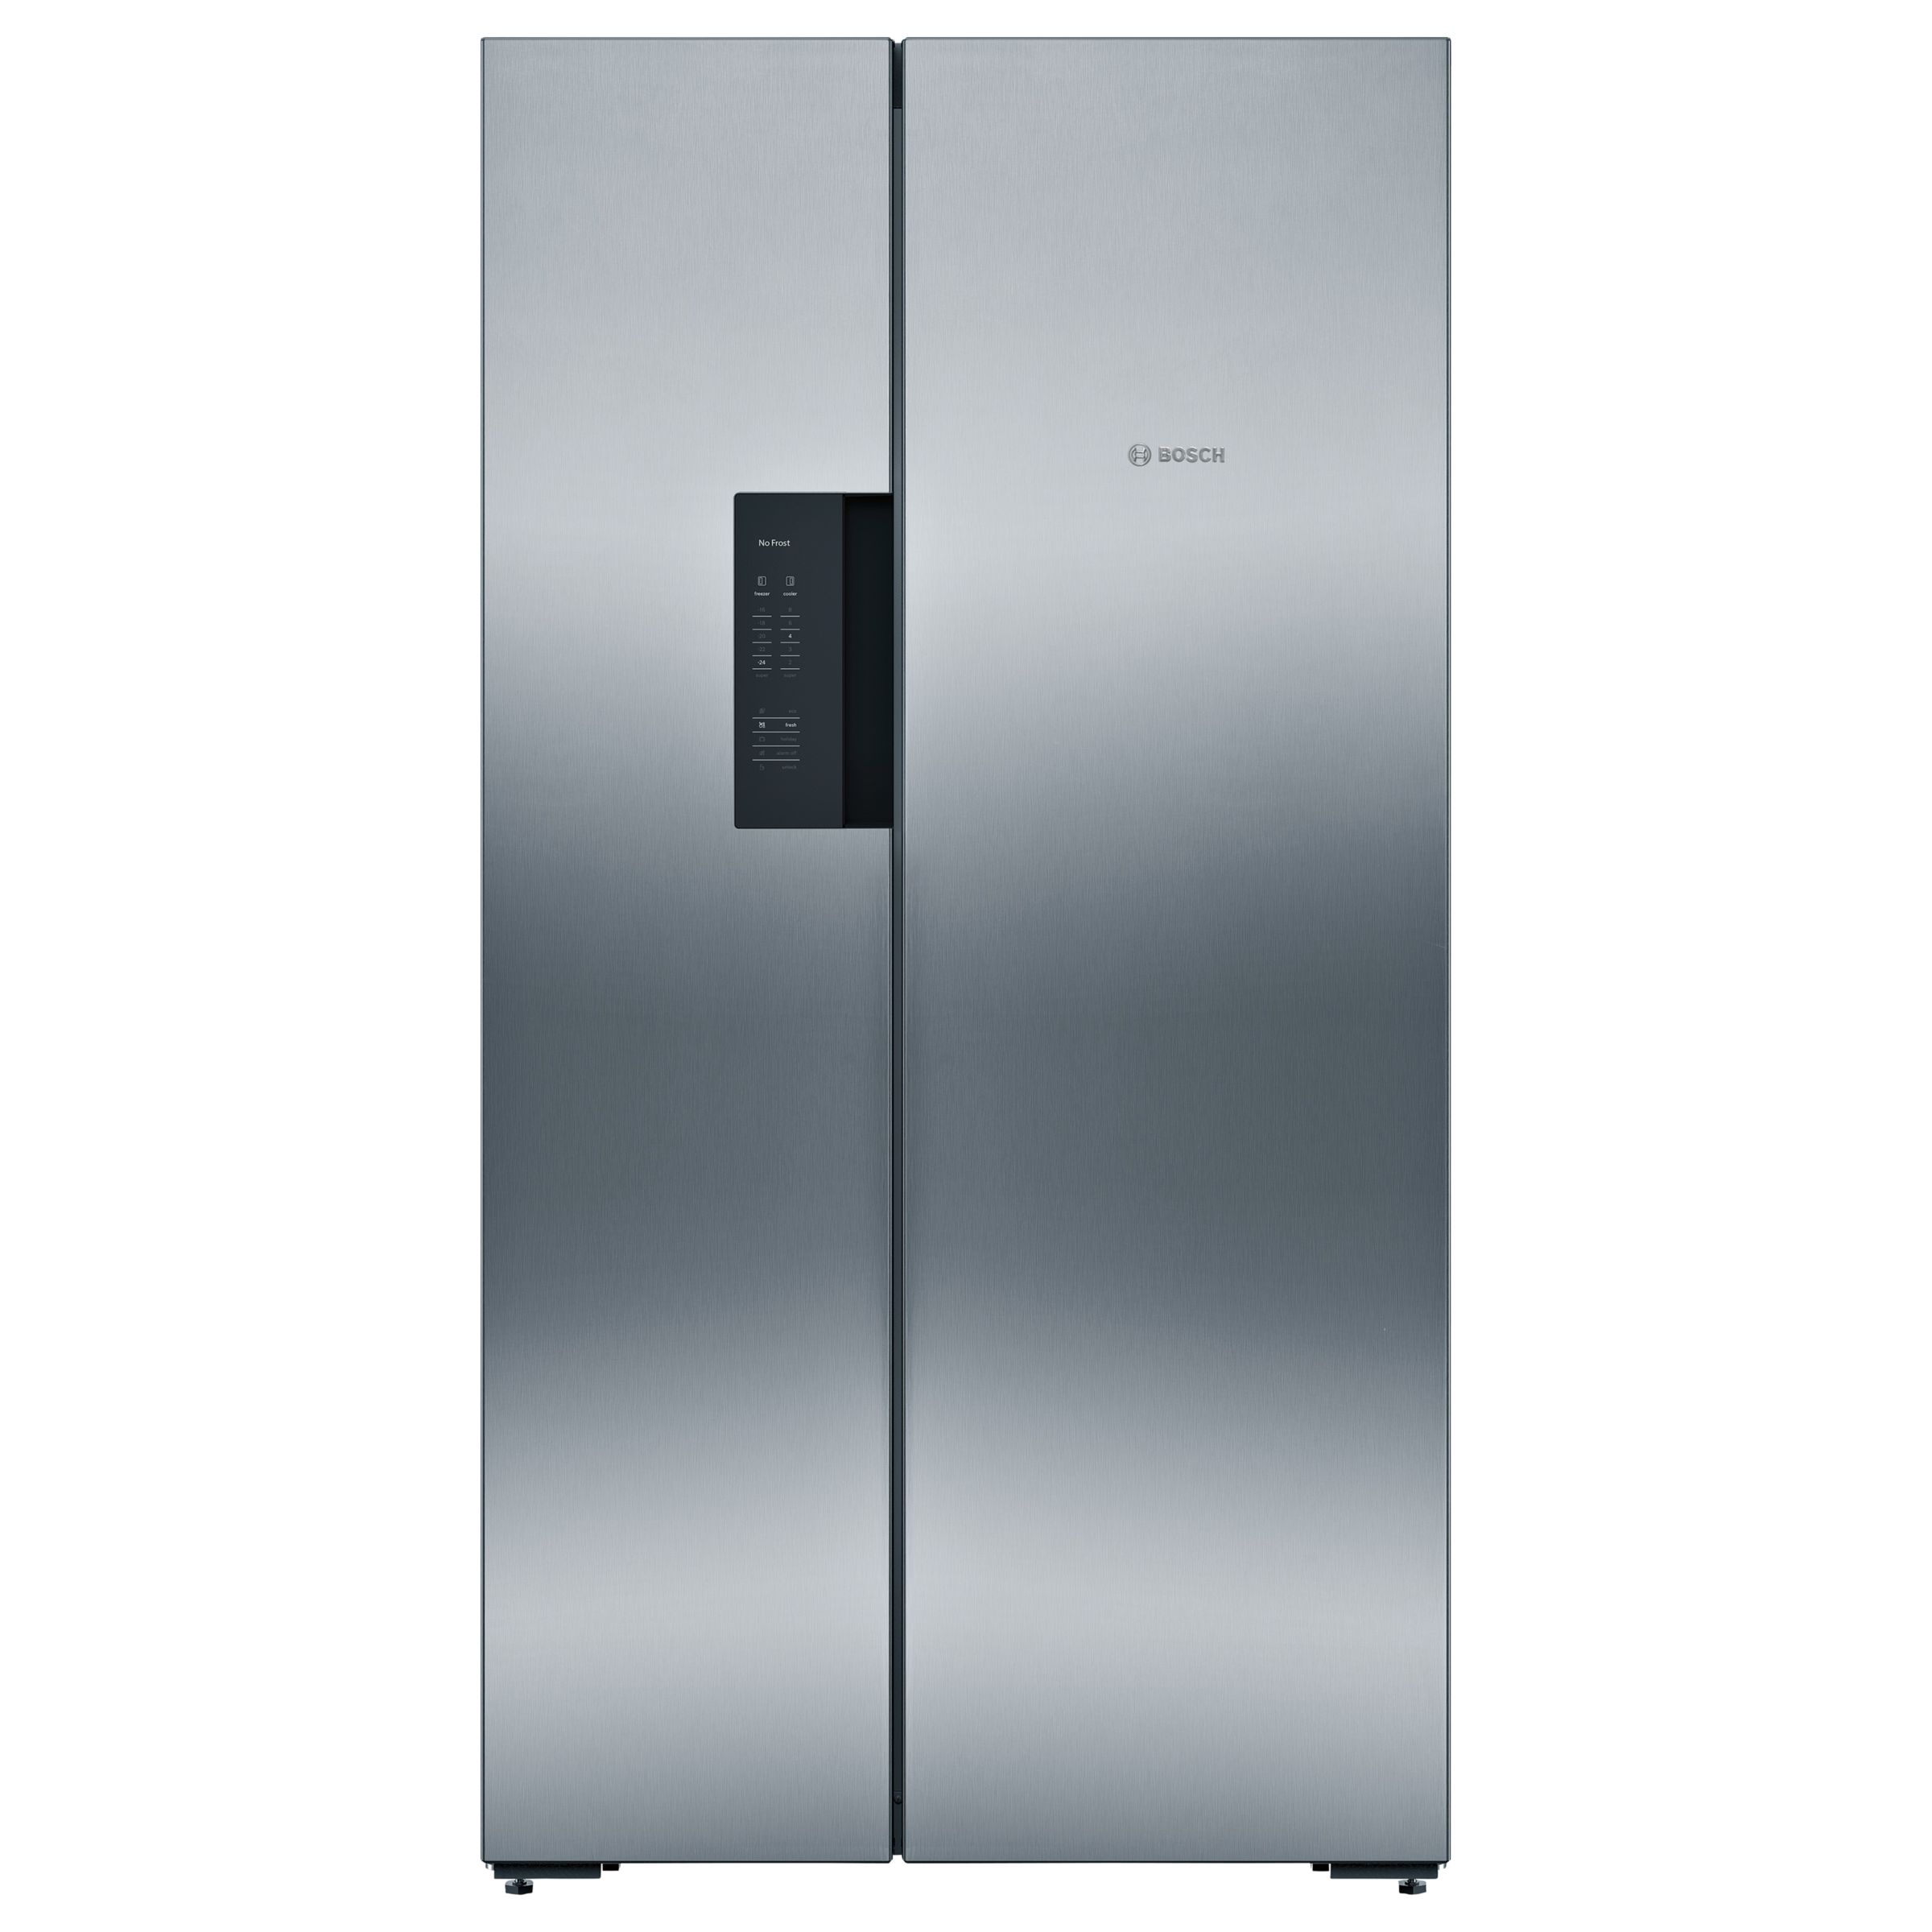 Bosch KAN92VI35 American Style Fridge Freezer, A++ Energy Rating, 91cm Wide, Stainless Steel/Chrome Inox